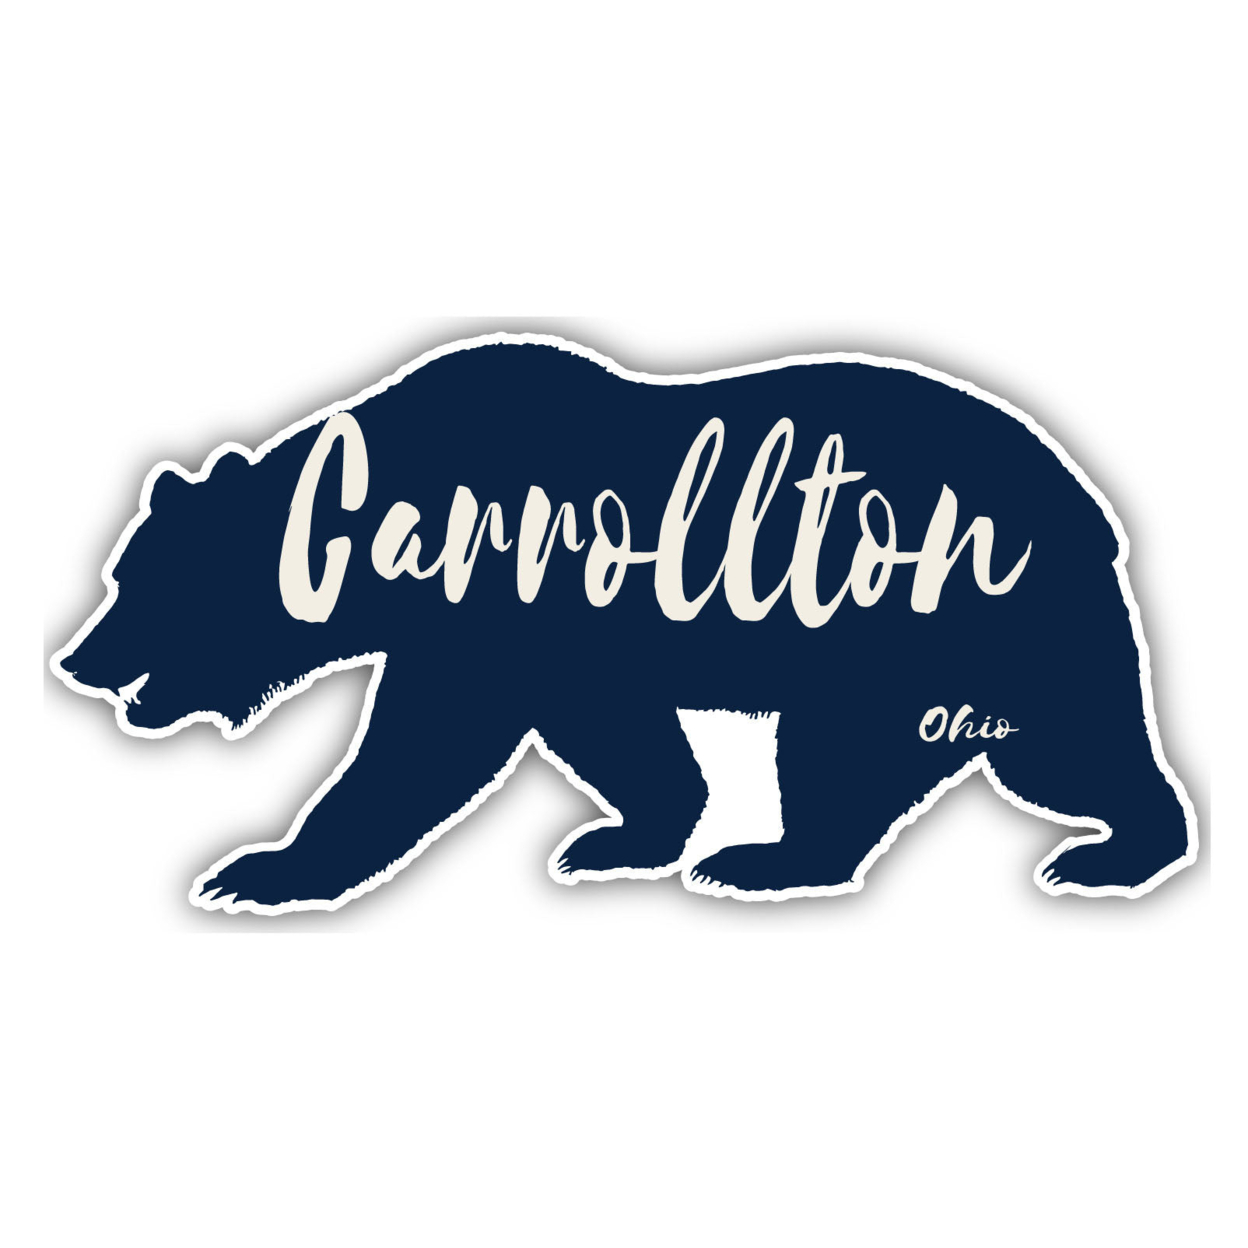 Carrollton Ohio Souvenir Decorative Stickers (Choose Theme And Size) - 4-Pack, 10-Inch, Bear